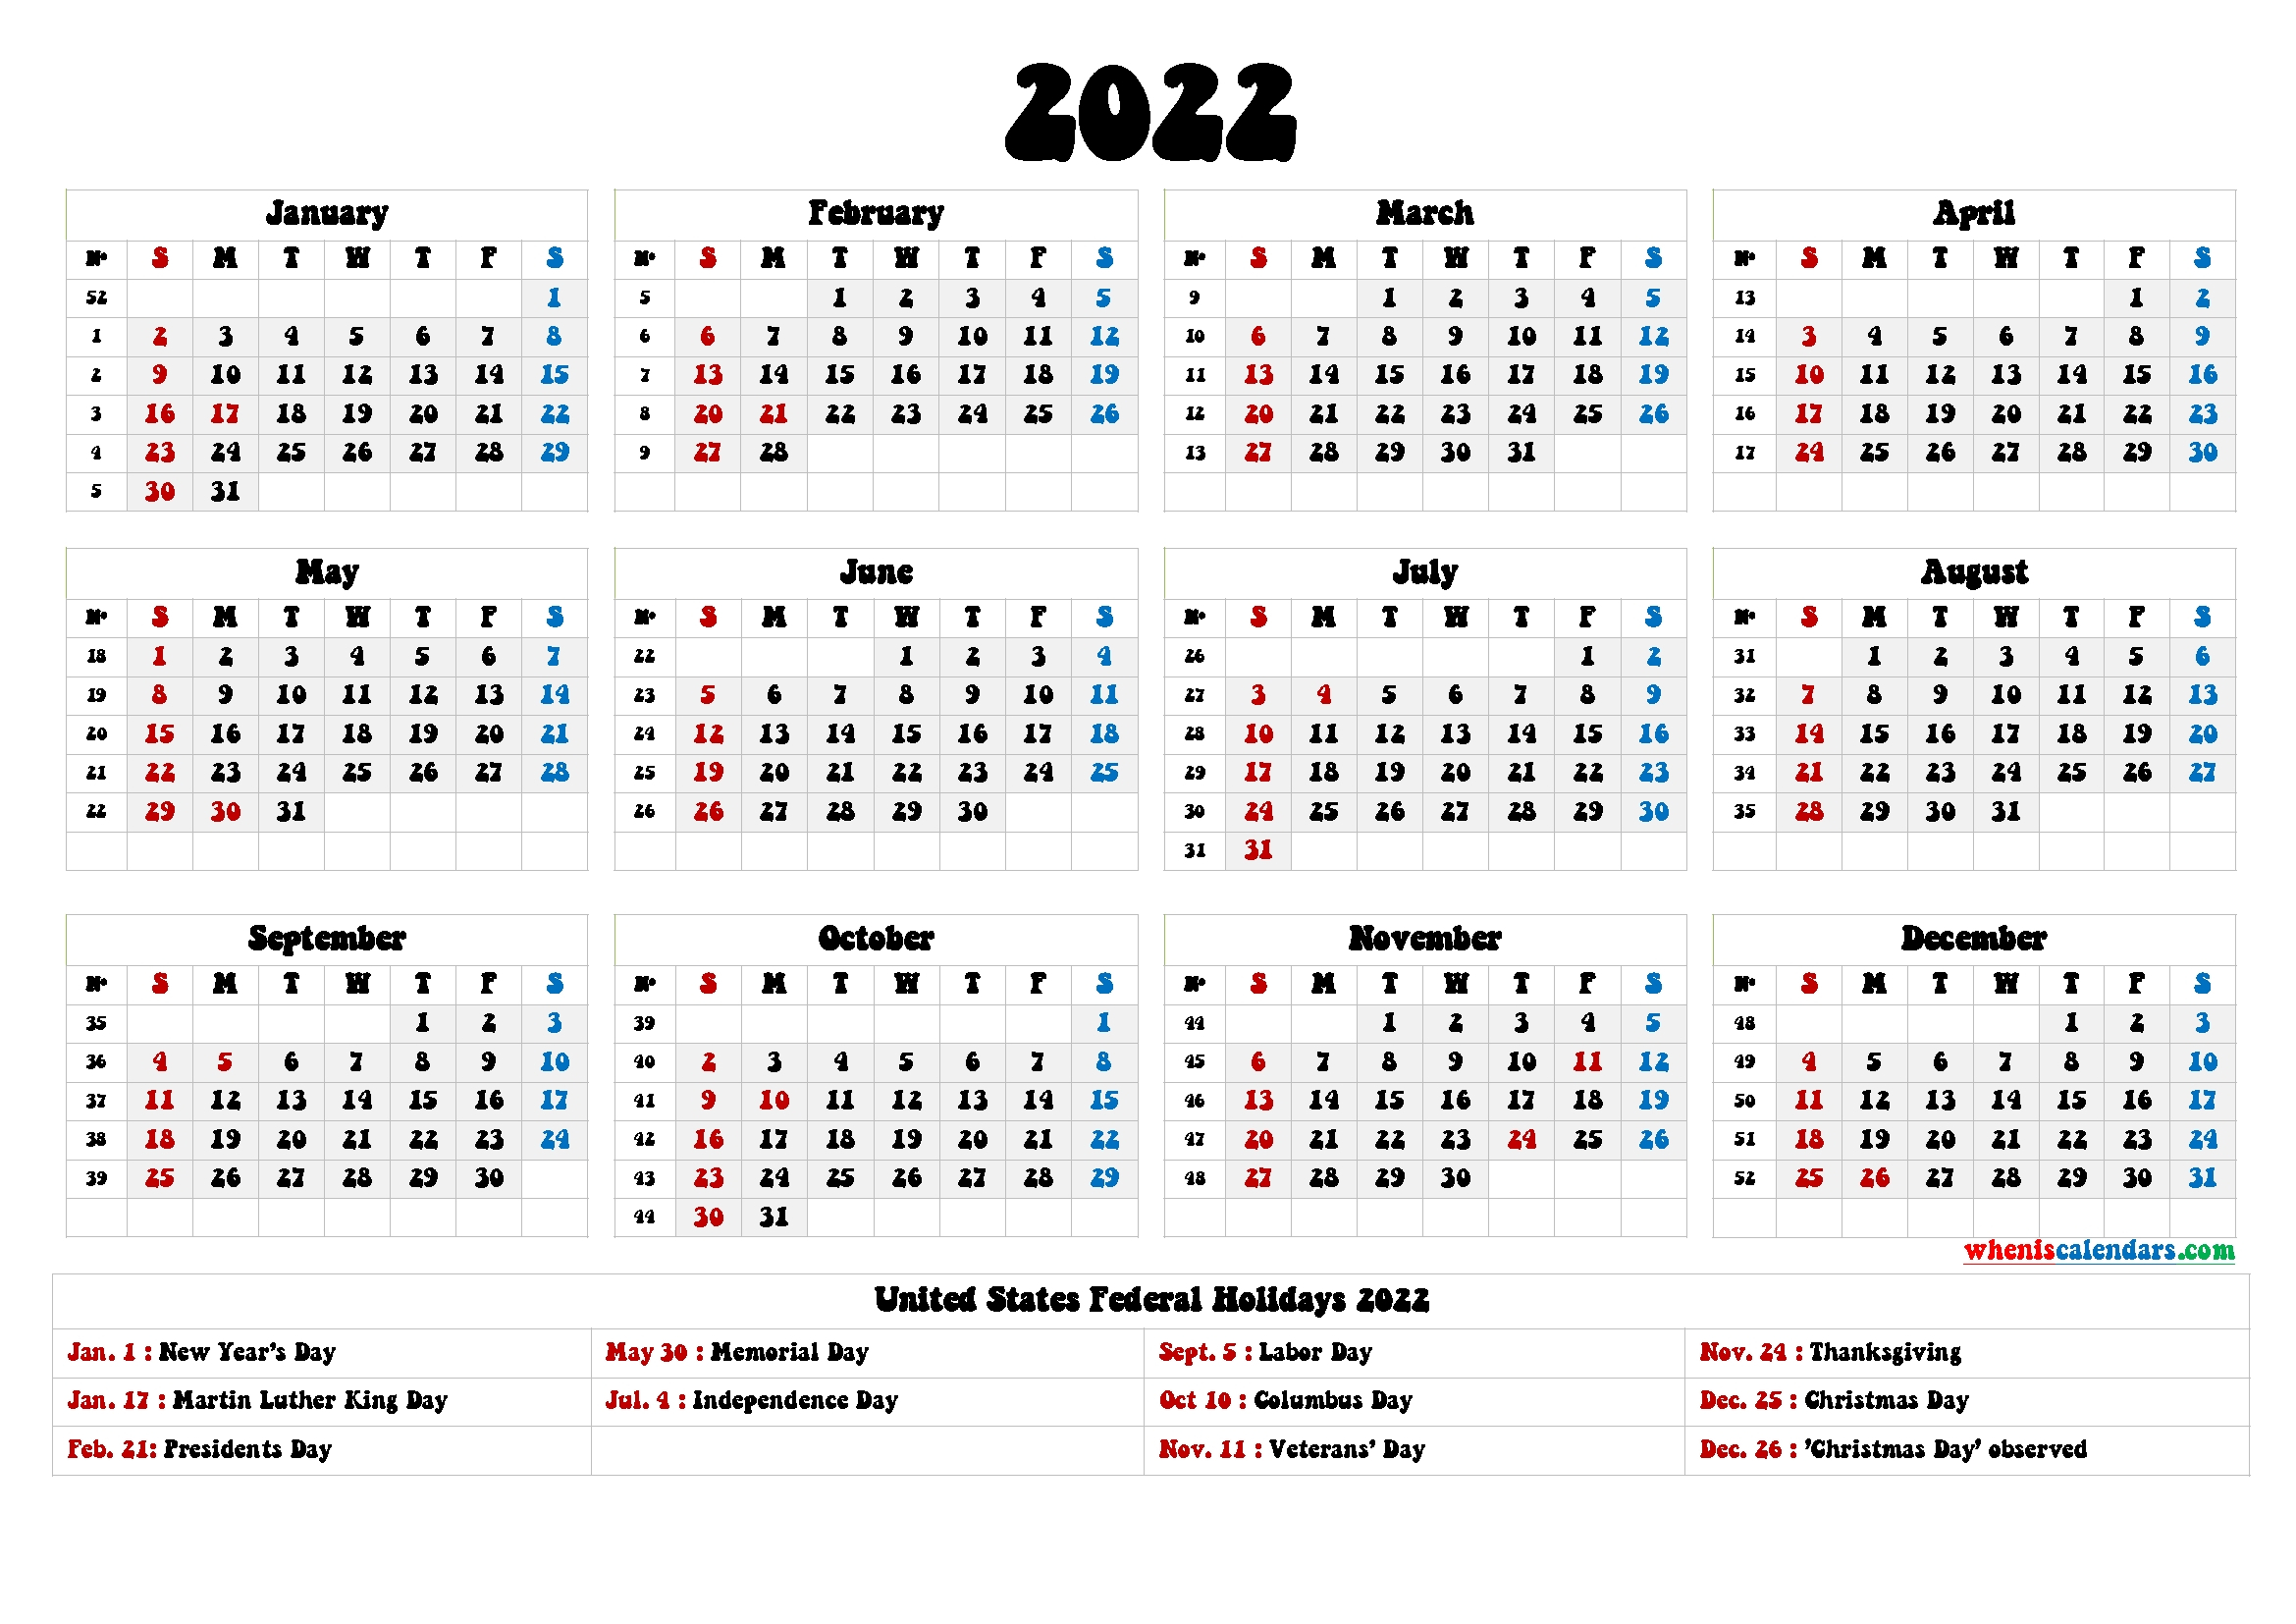 How To Australia School Calendar 2022 | Get Your Calendar Blank Calendar School Term